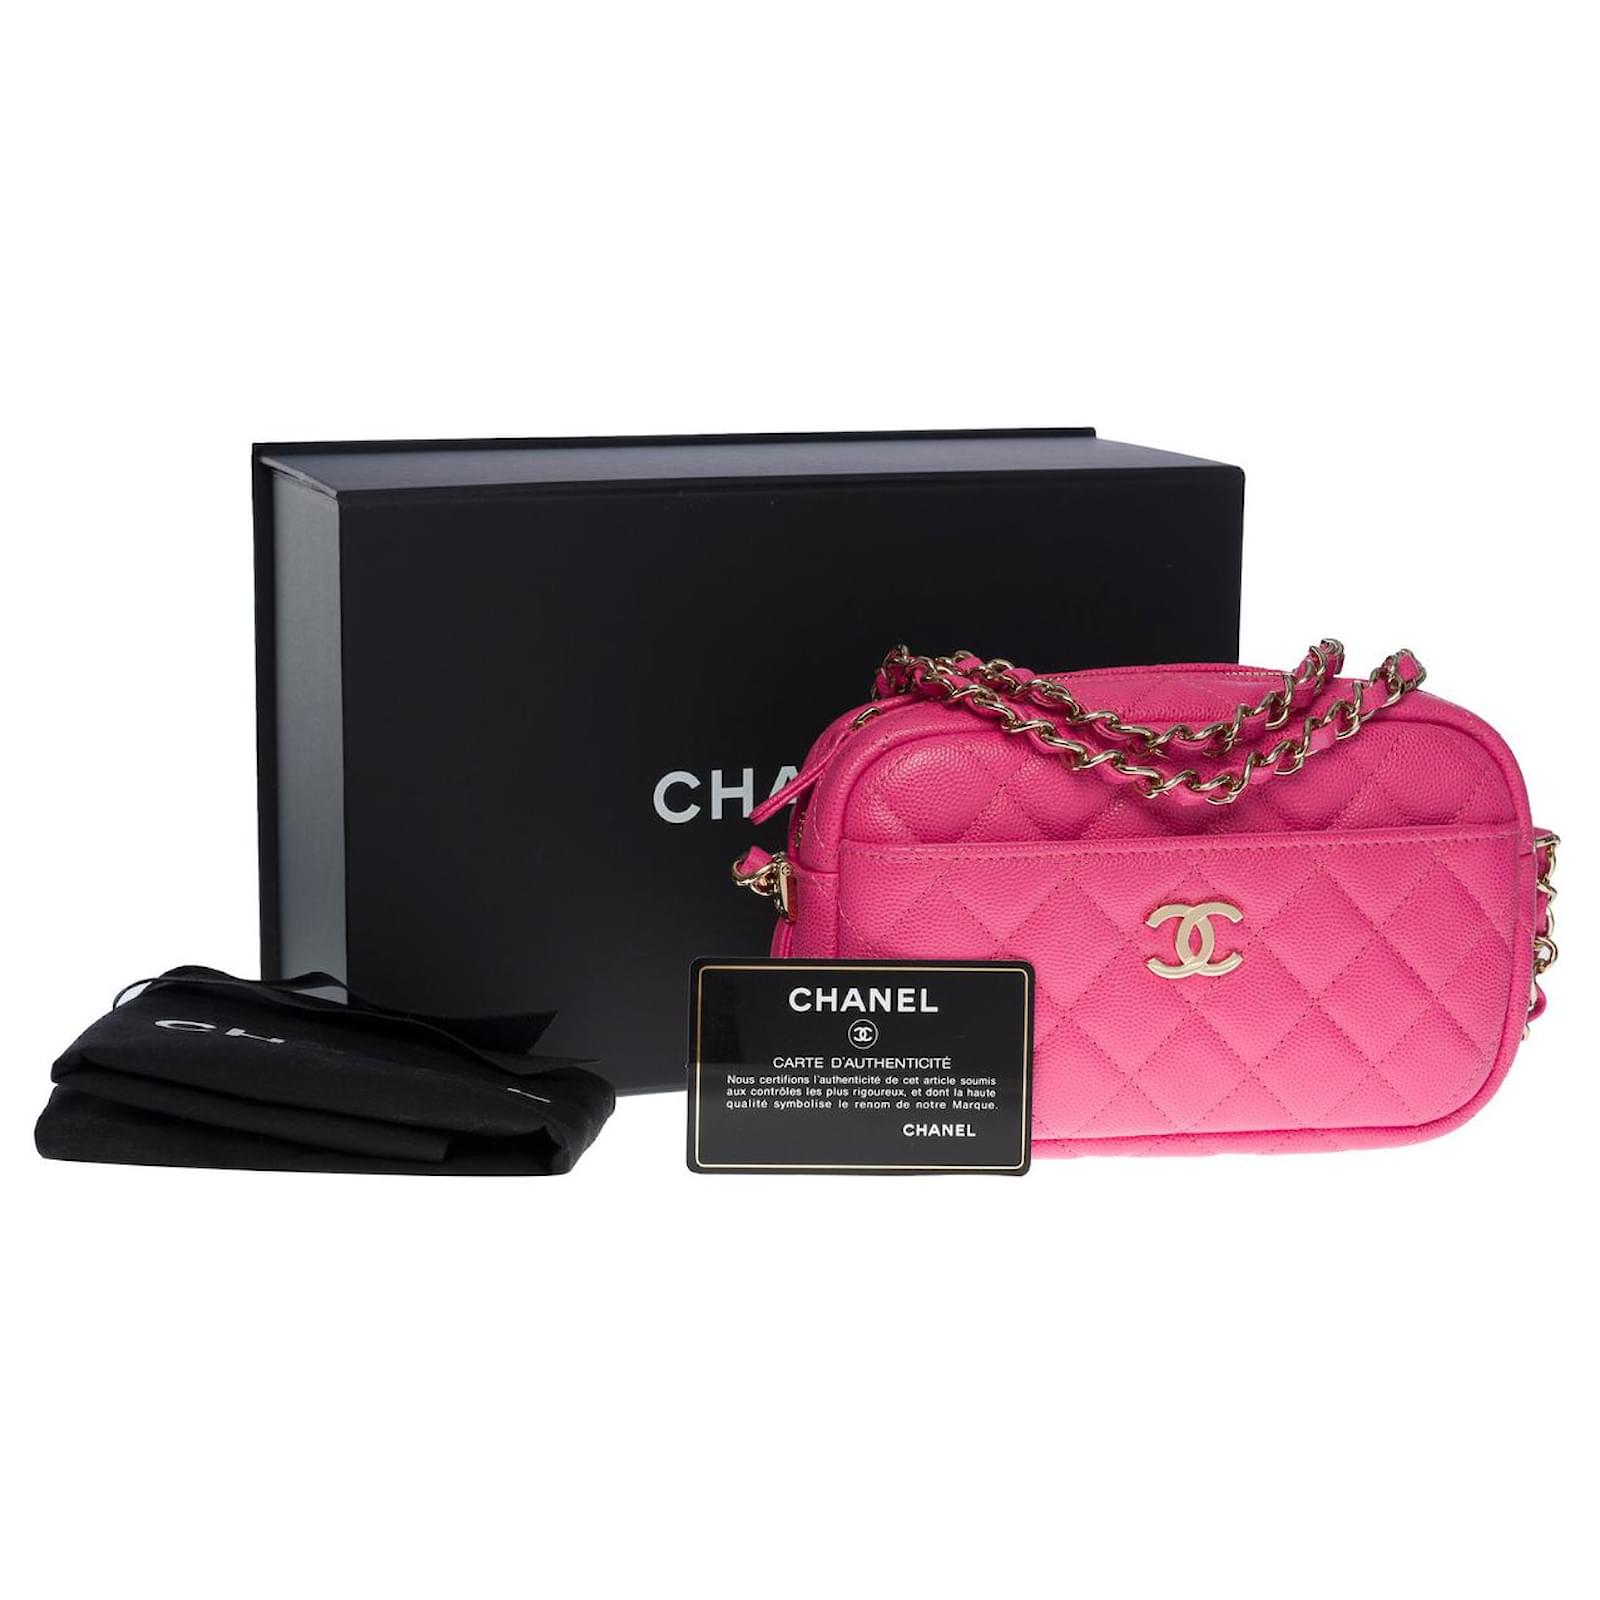 New Chanel camera bag